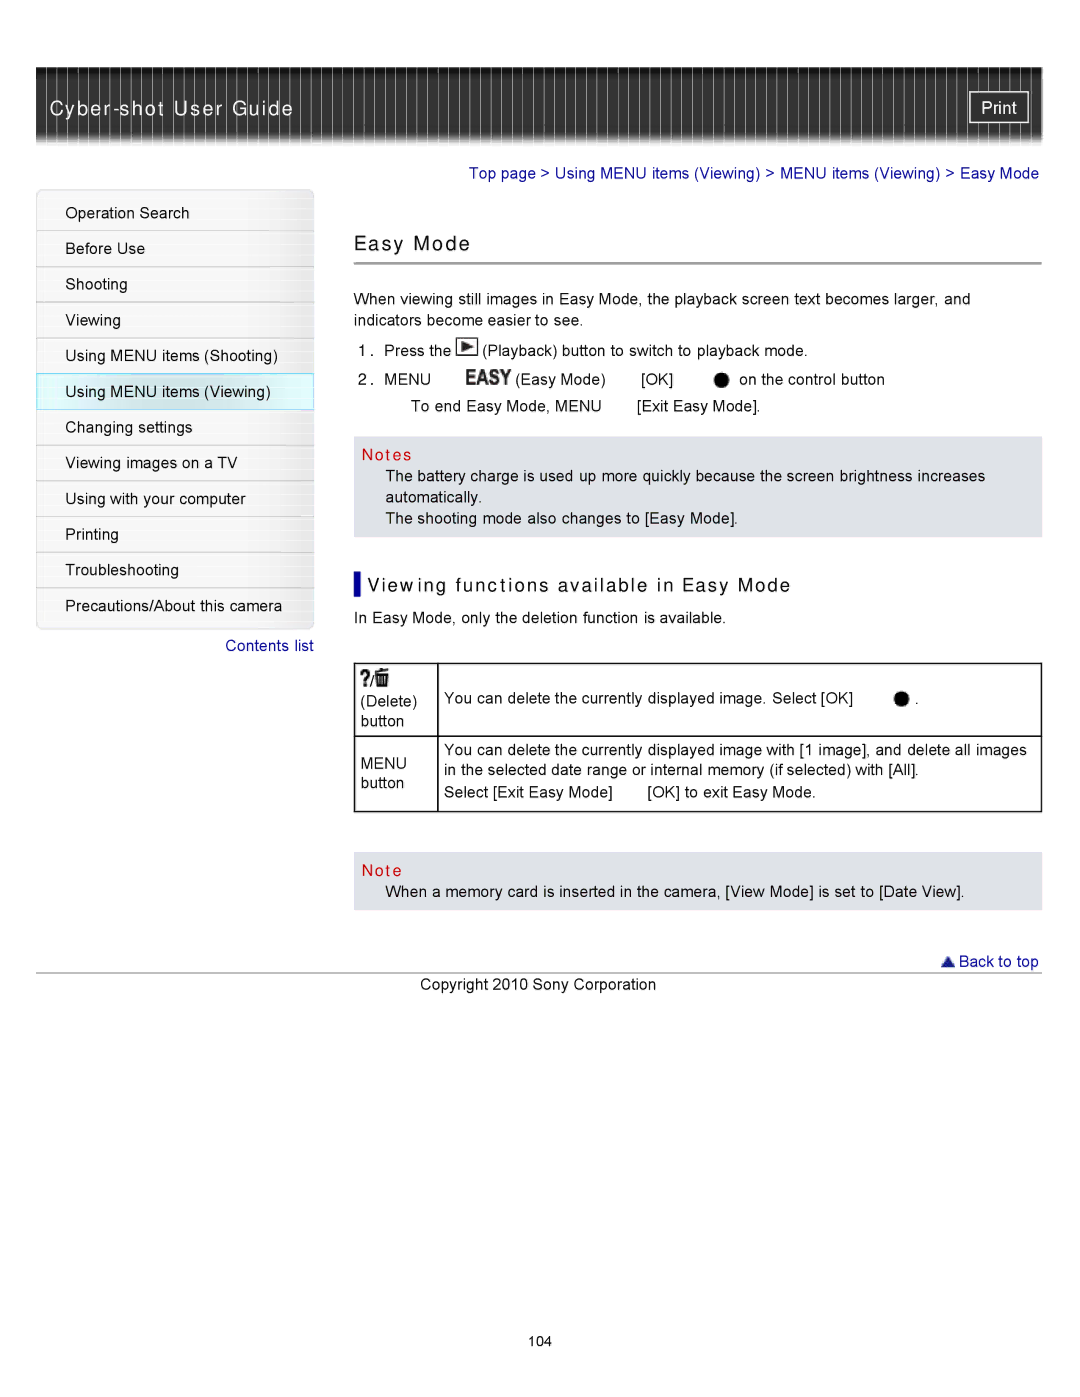 Sony DSC-W570D, DSC-W580 manual Viewing functions available in Easy Mode 